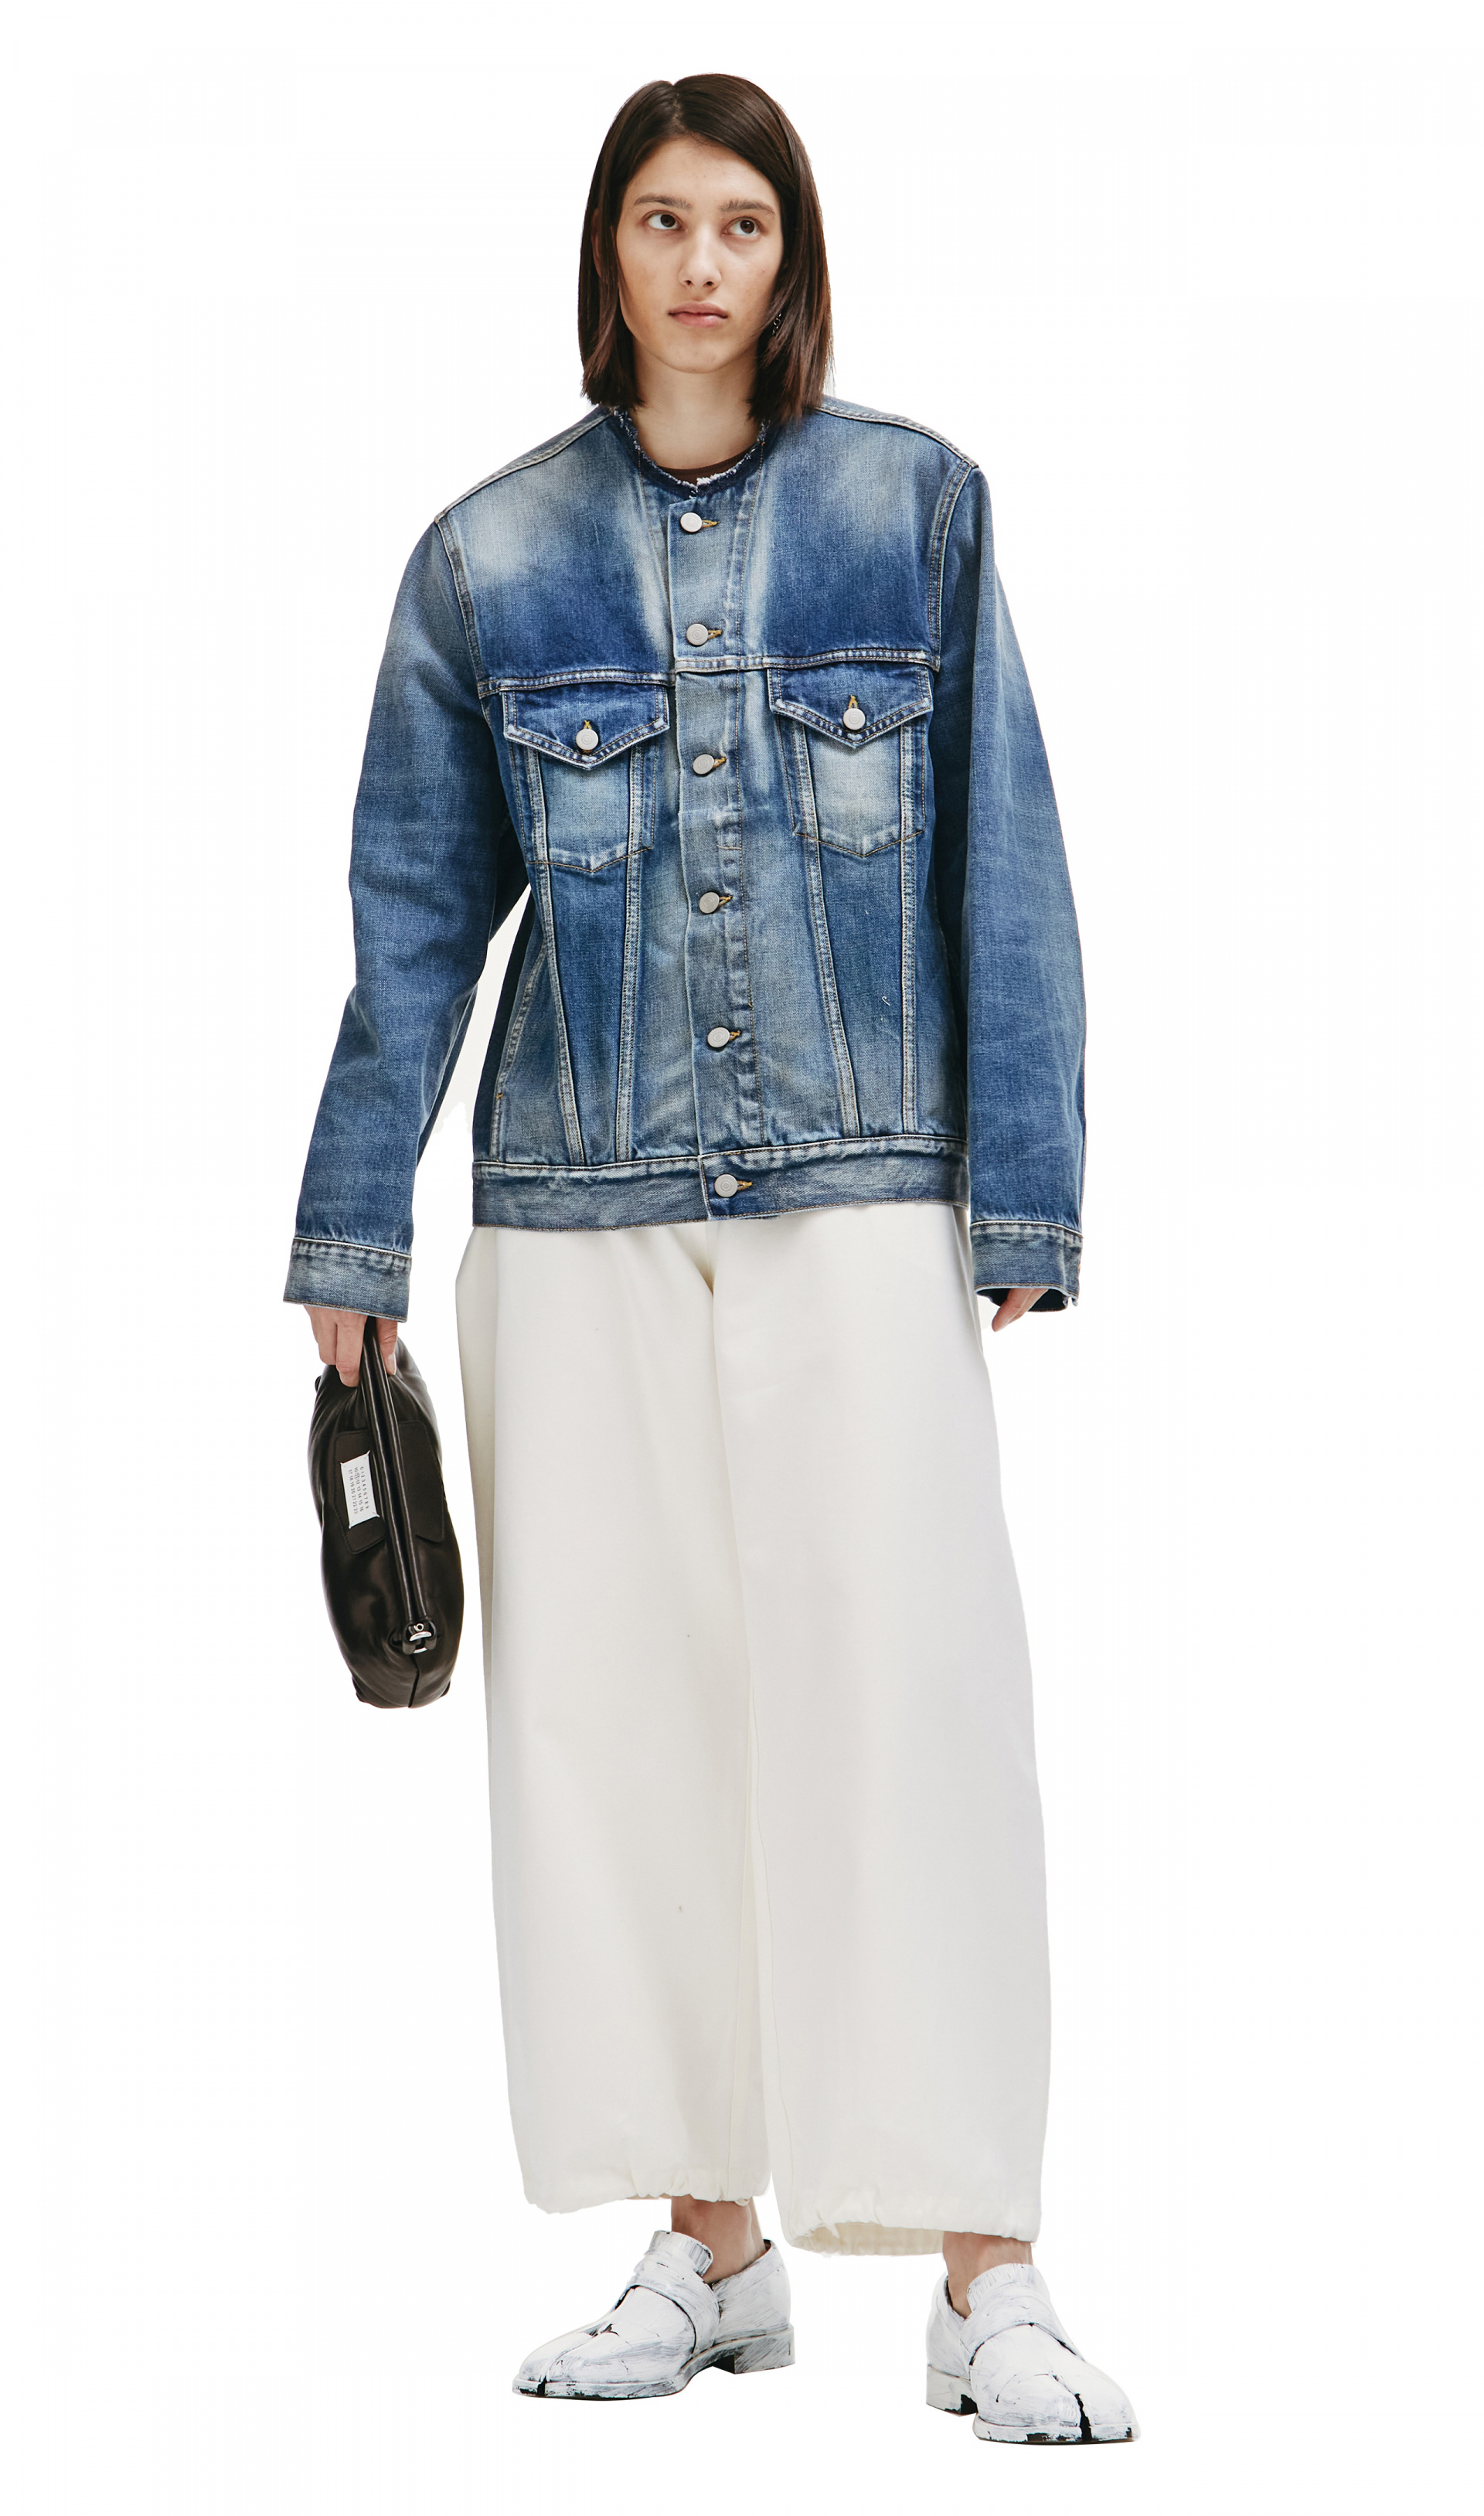 Shop Maison Margiela coats & jackets for women online at SV77